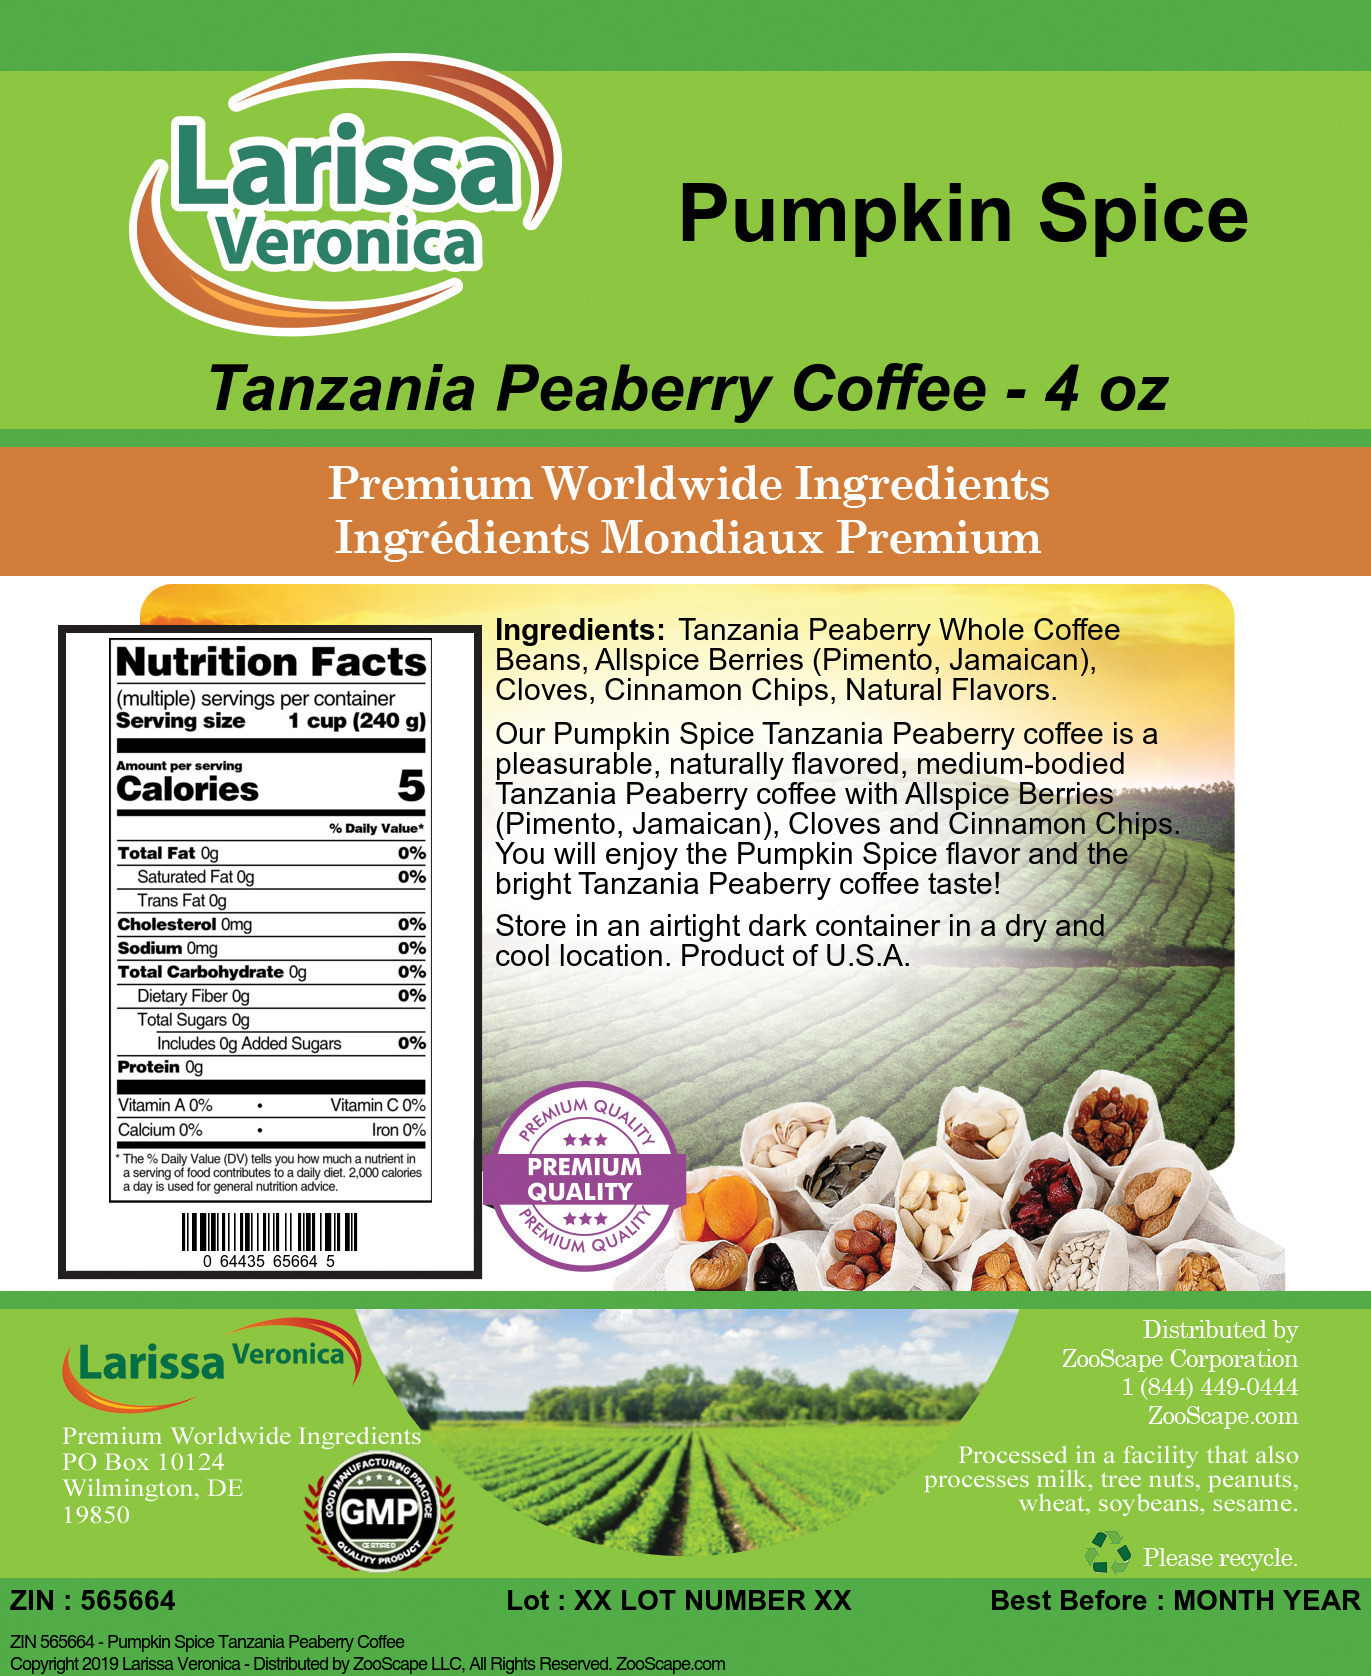 Pumpkin Spice Tanzania Peaberry Coffee - Label